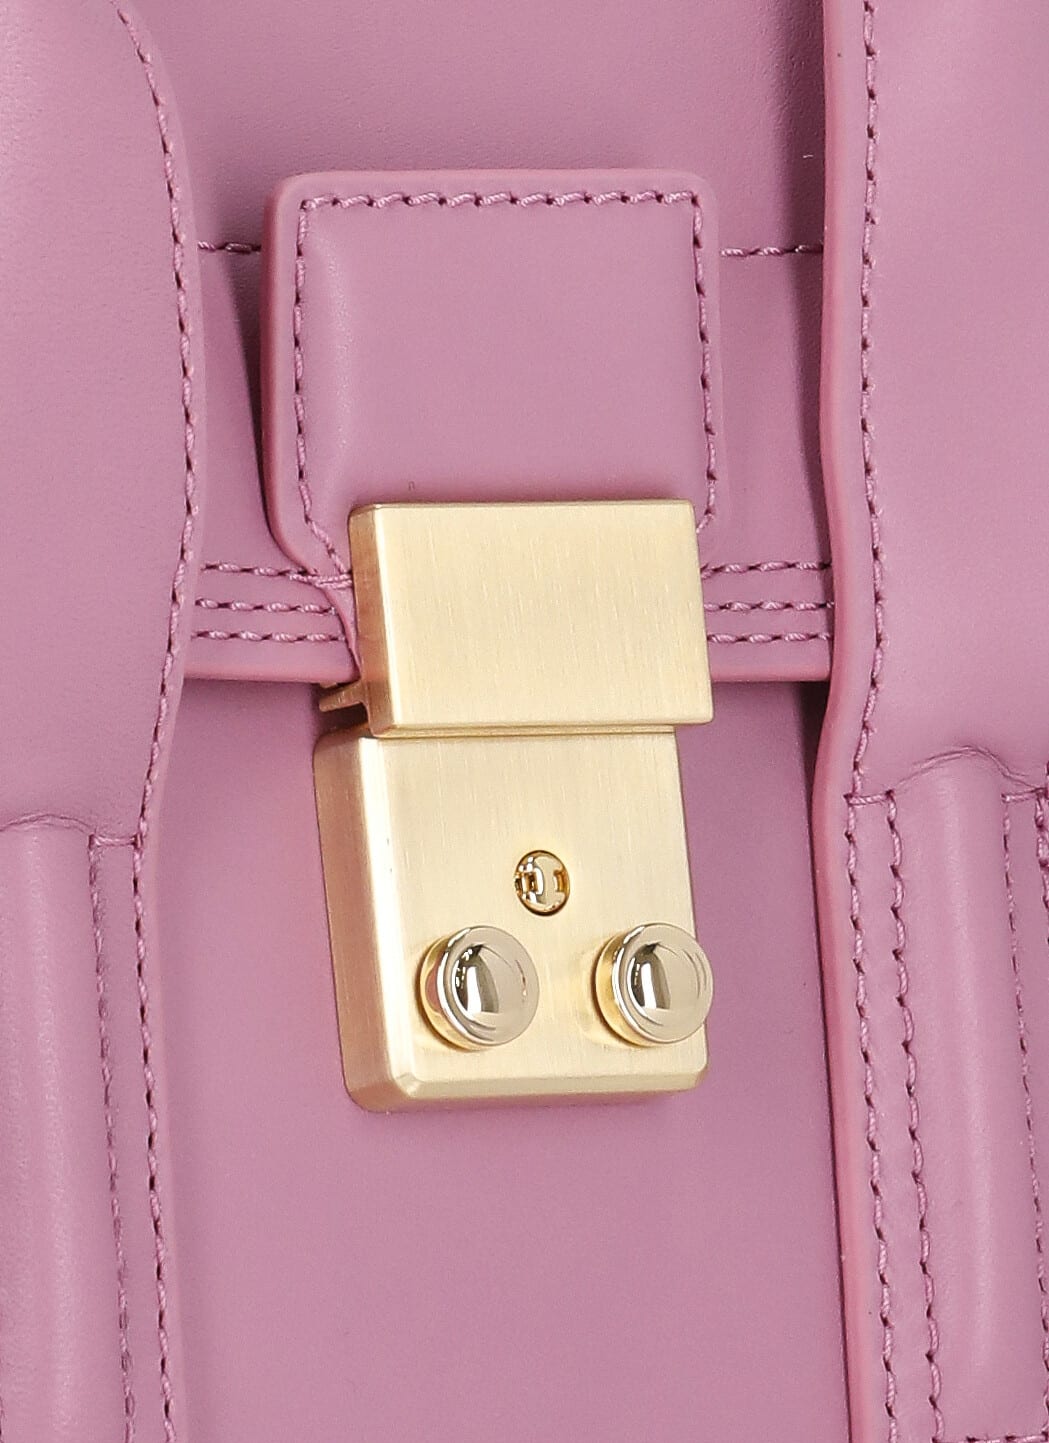 Shop 3.1 Phillip Lim / フィリップ リム Pashli Mini Satchel Handbag In Pink